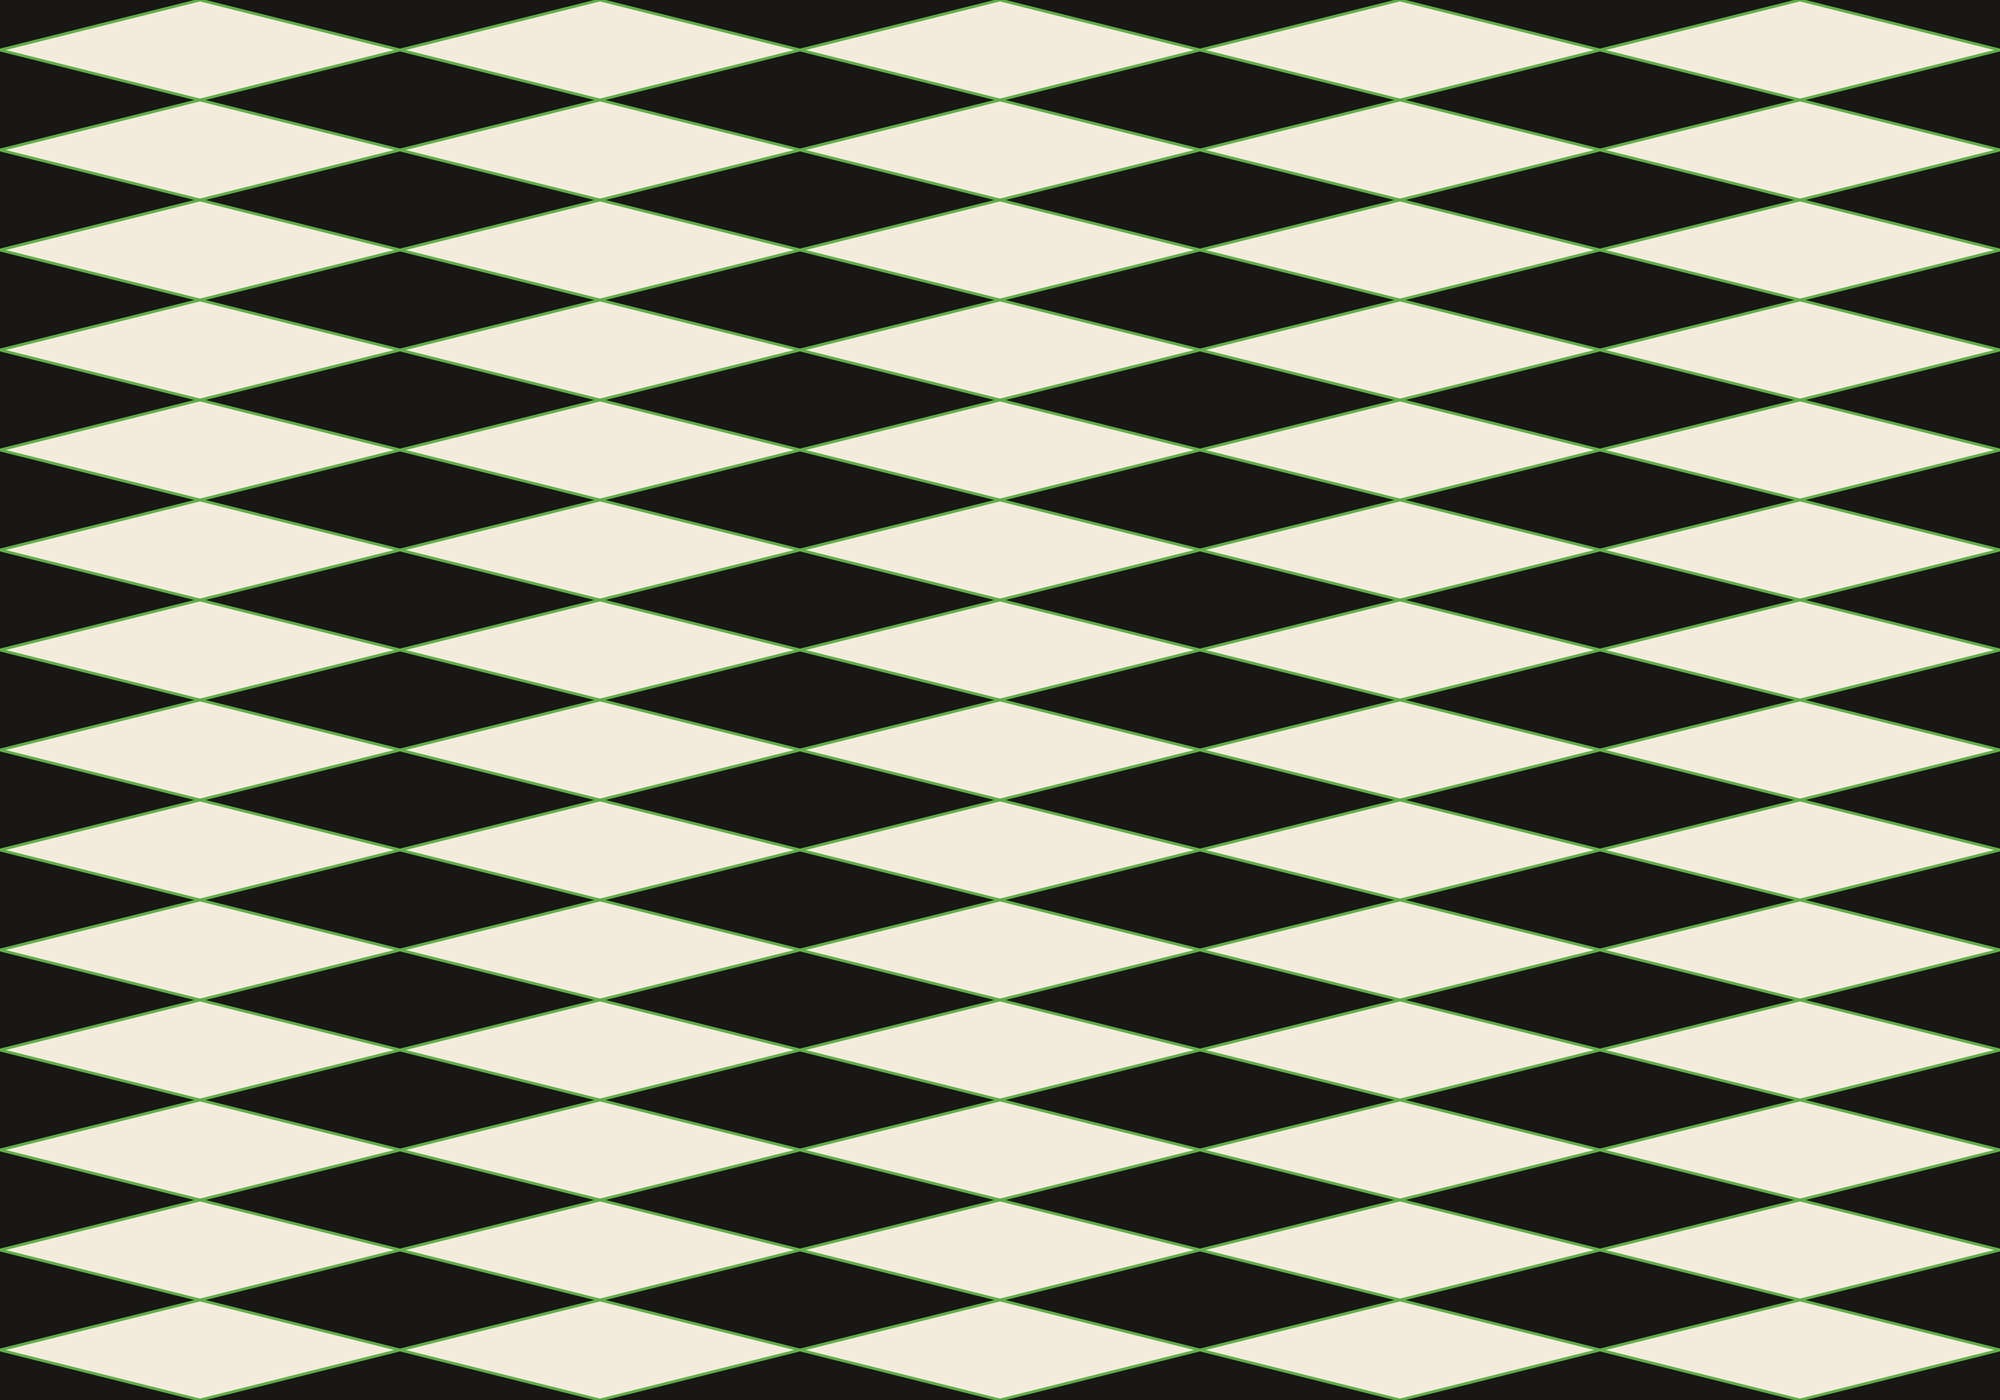             Graphic Wallpaper with Diamonds & Line Patterns - Black, Cream, Green | Premium Smooth Non-woven
        